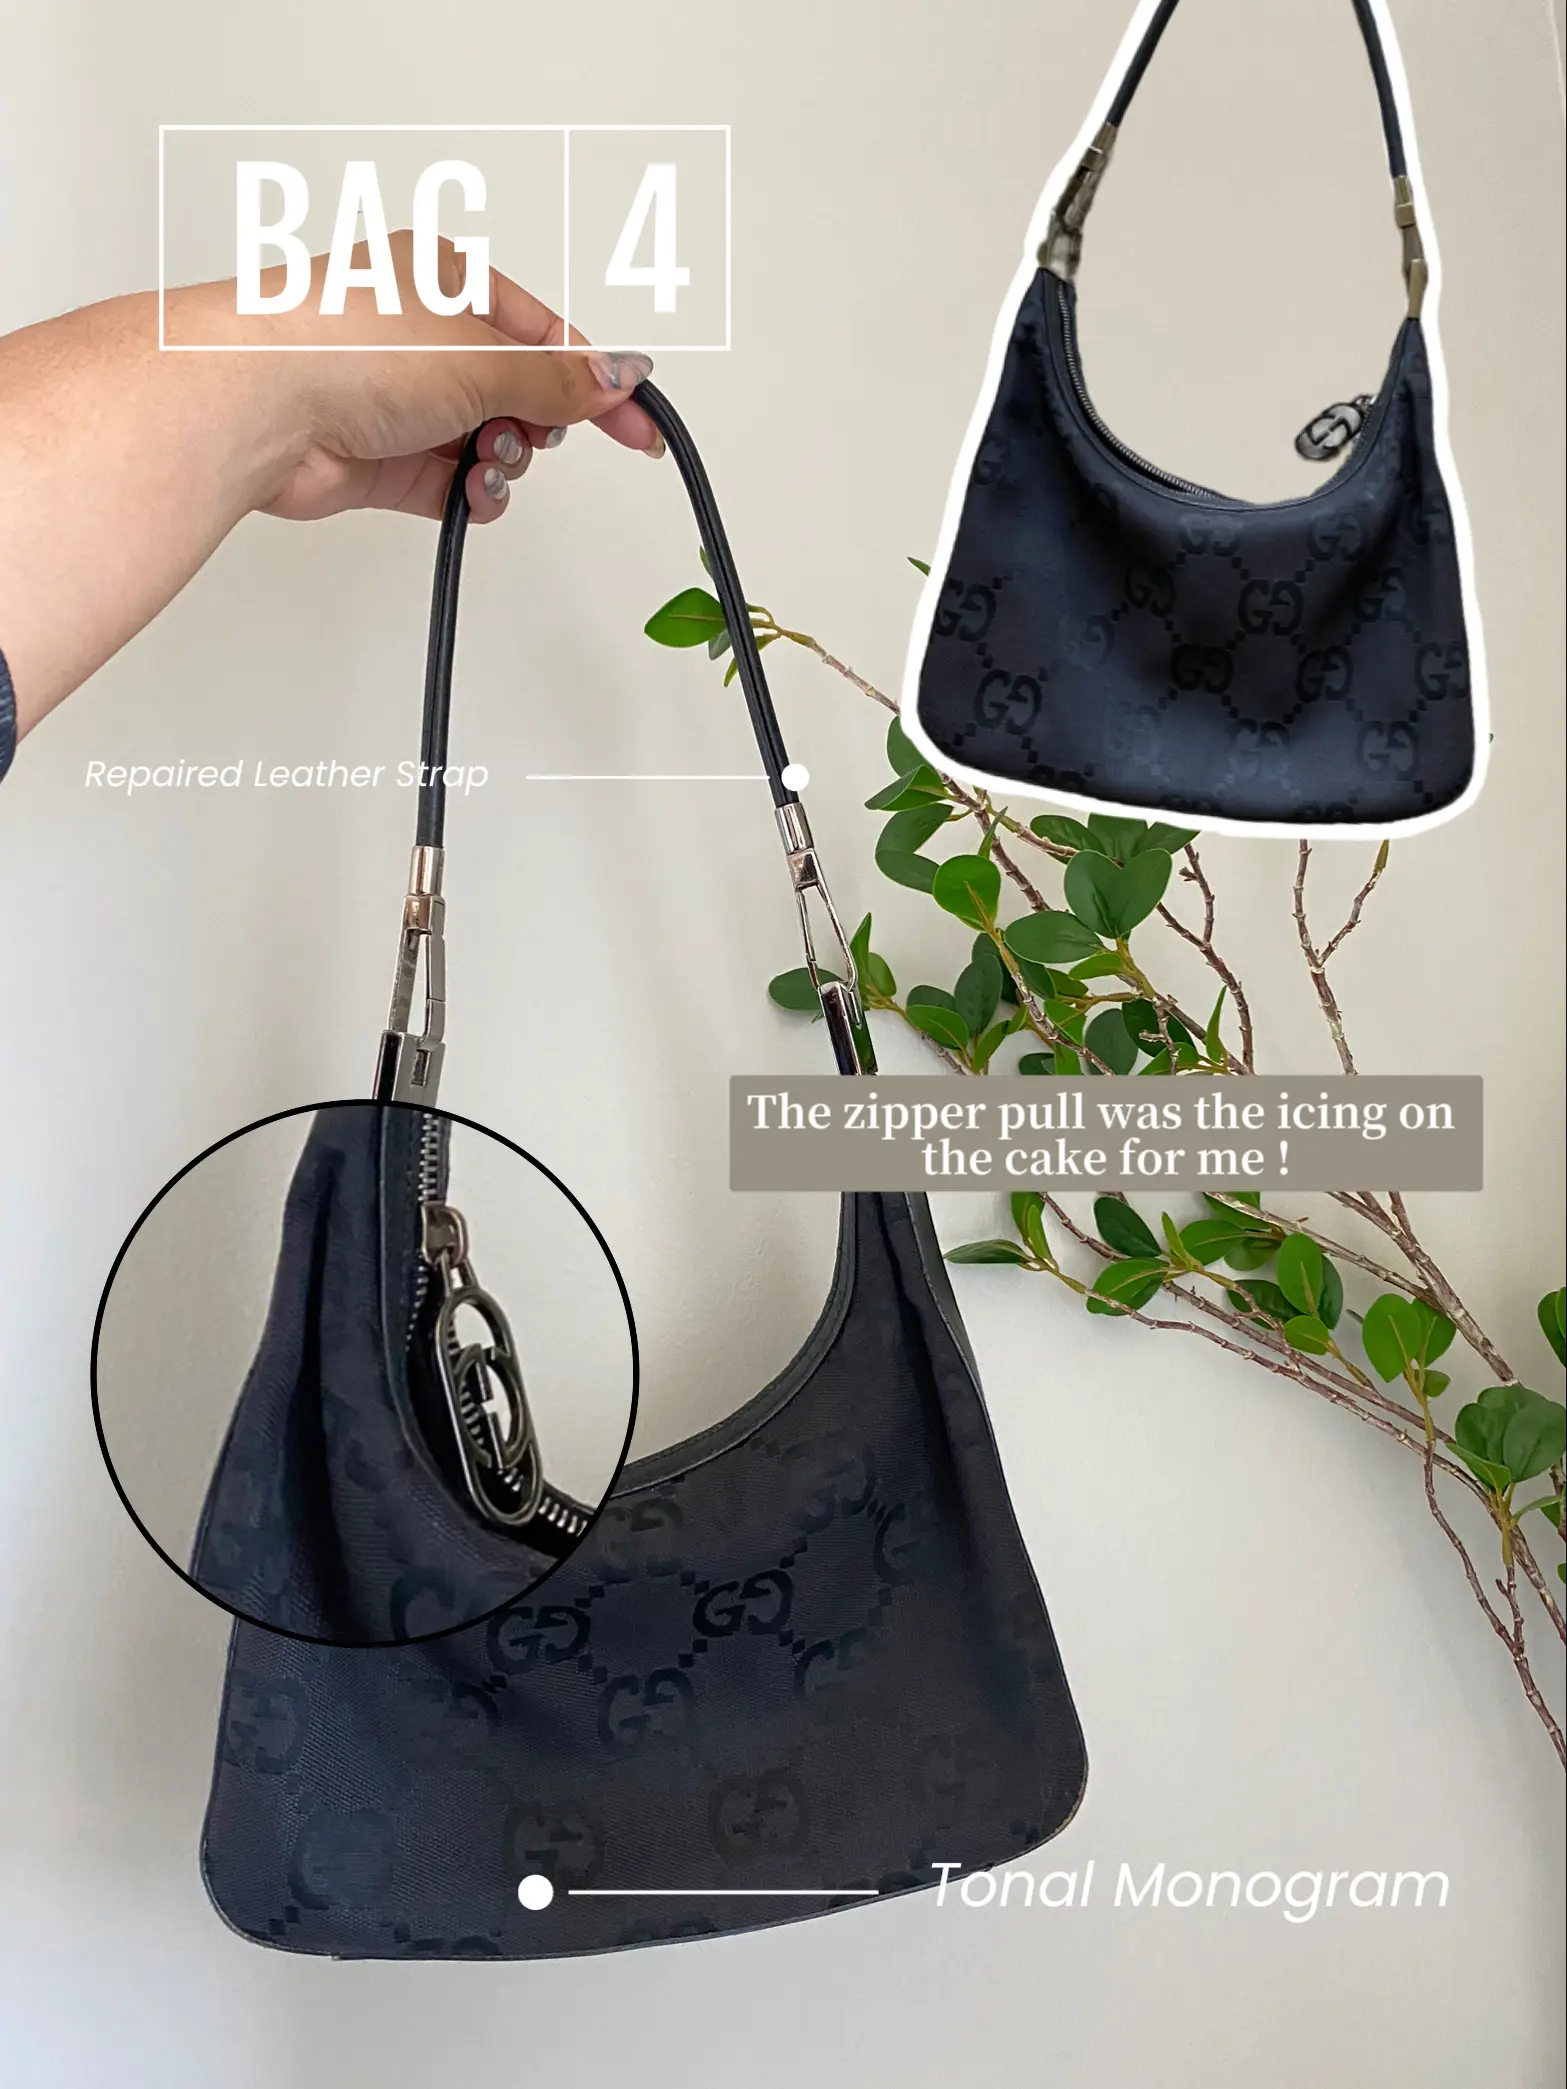 Micro Speedy Denim Bag Charm S00 - Women - Accessories